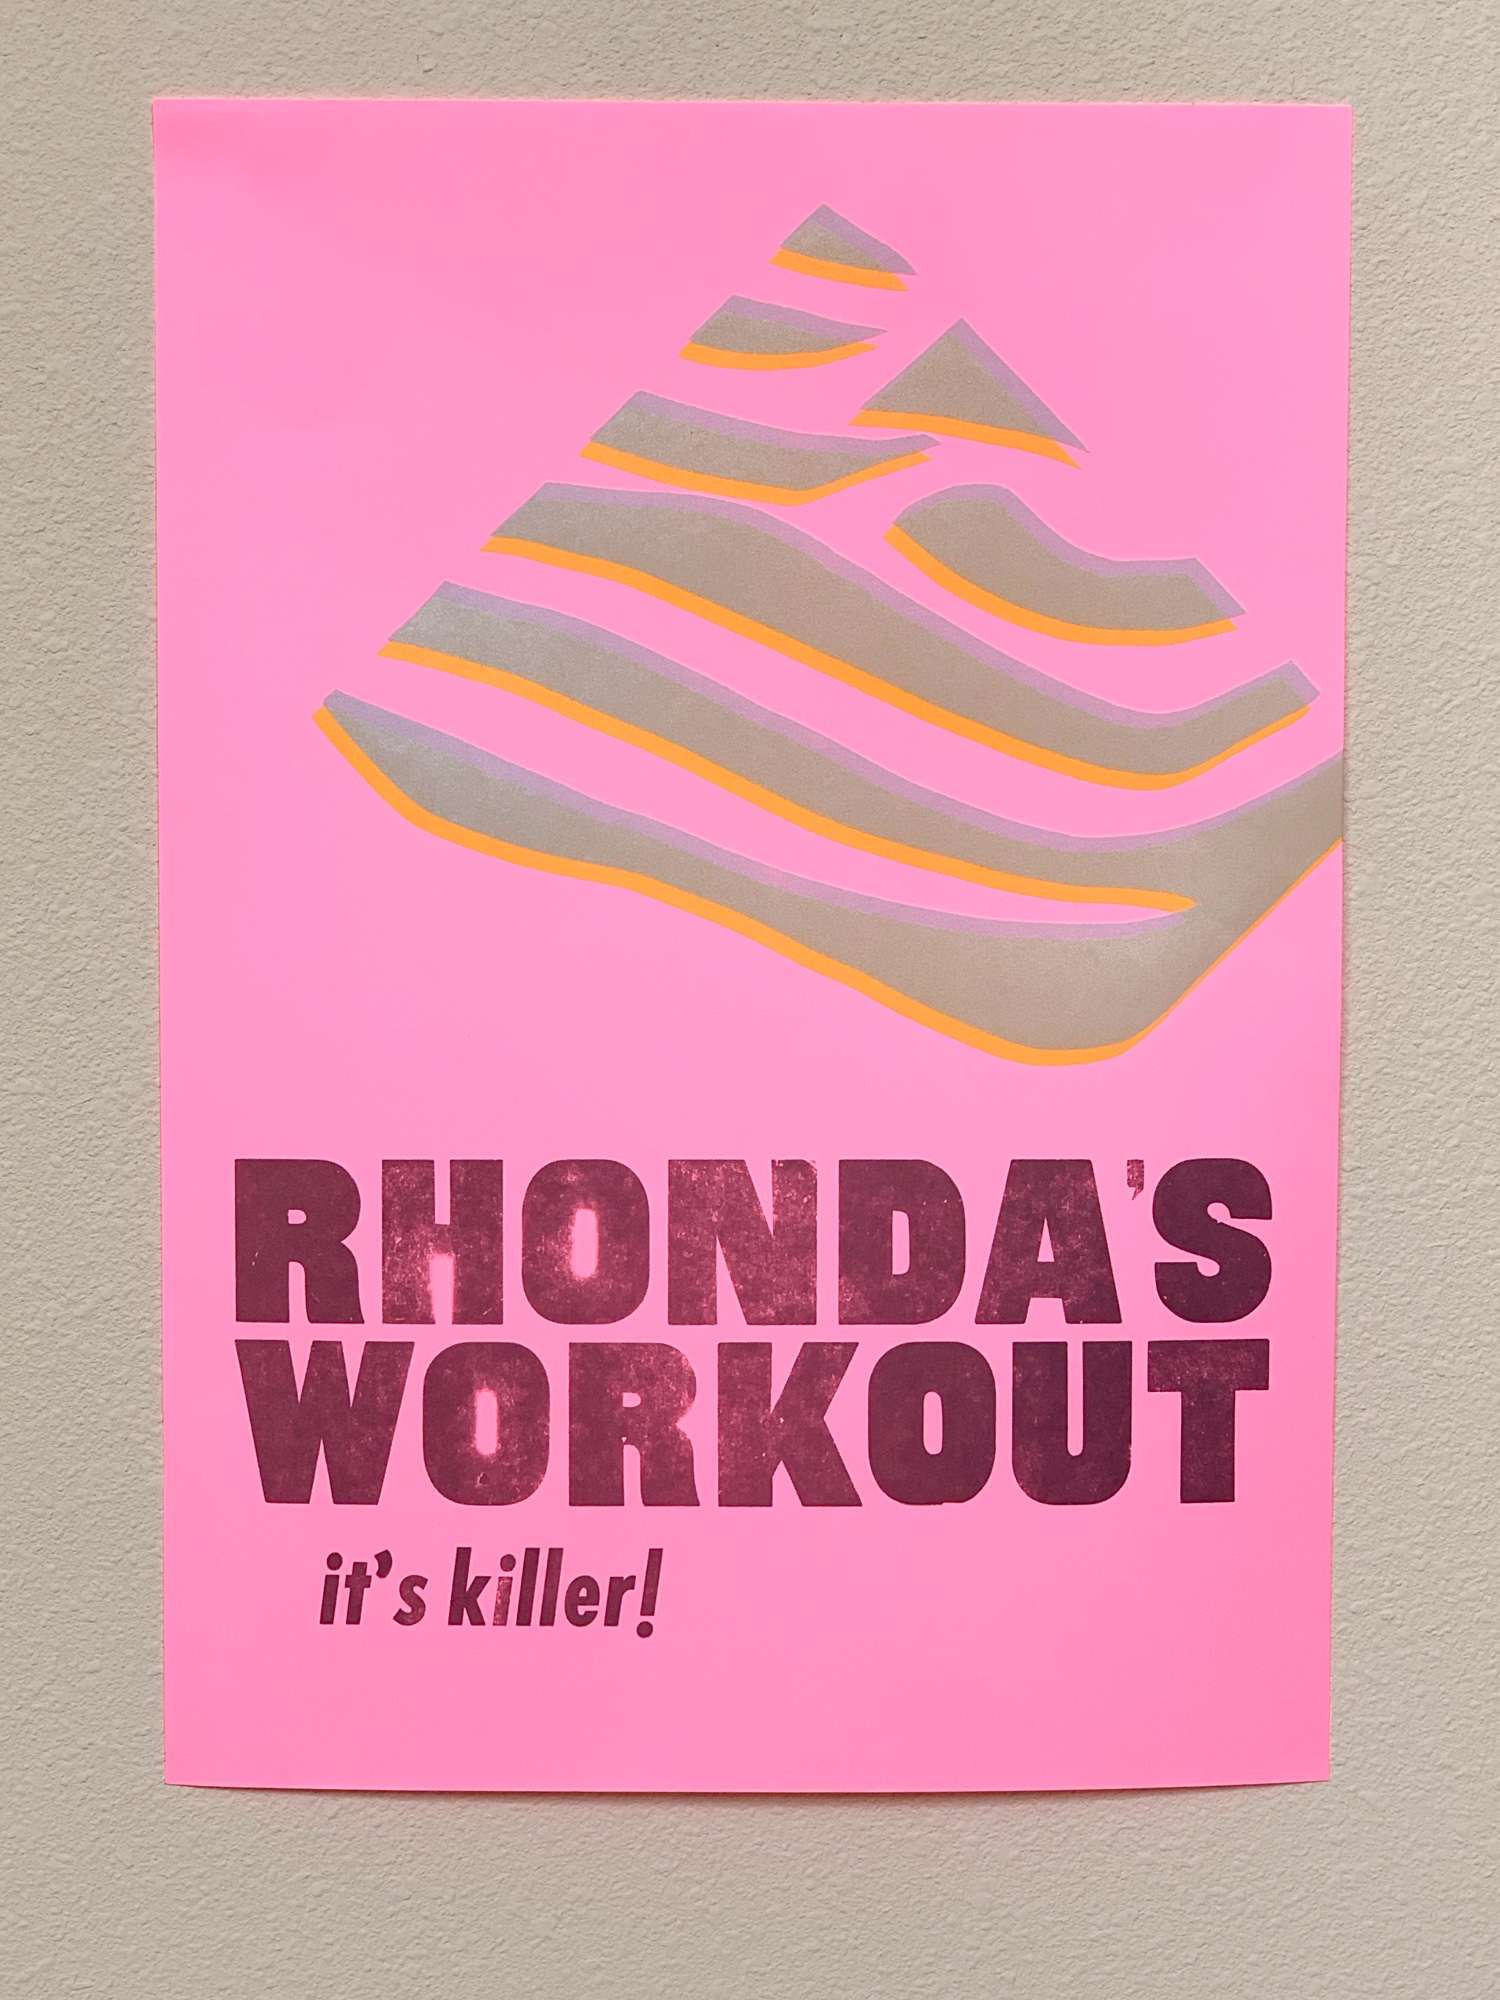 Rhonda's Workout